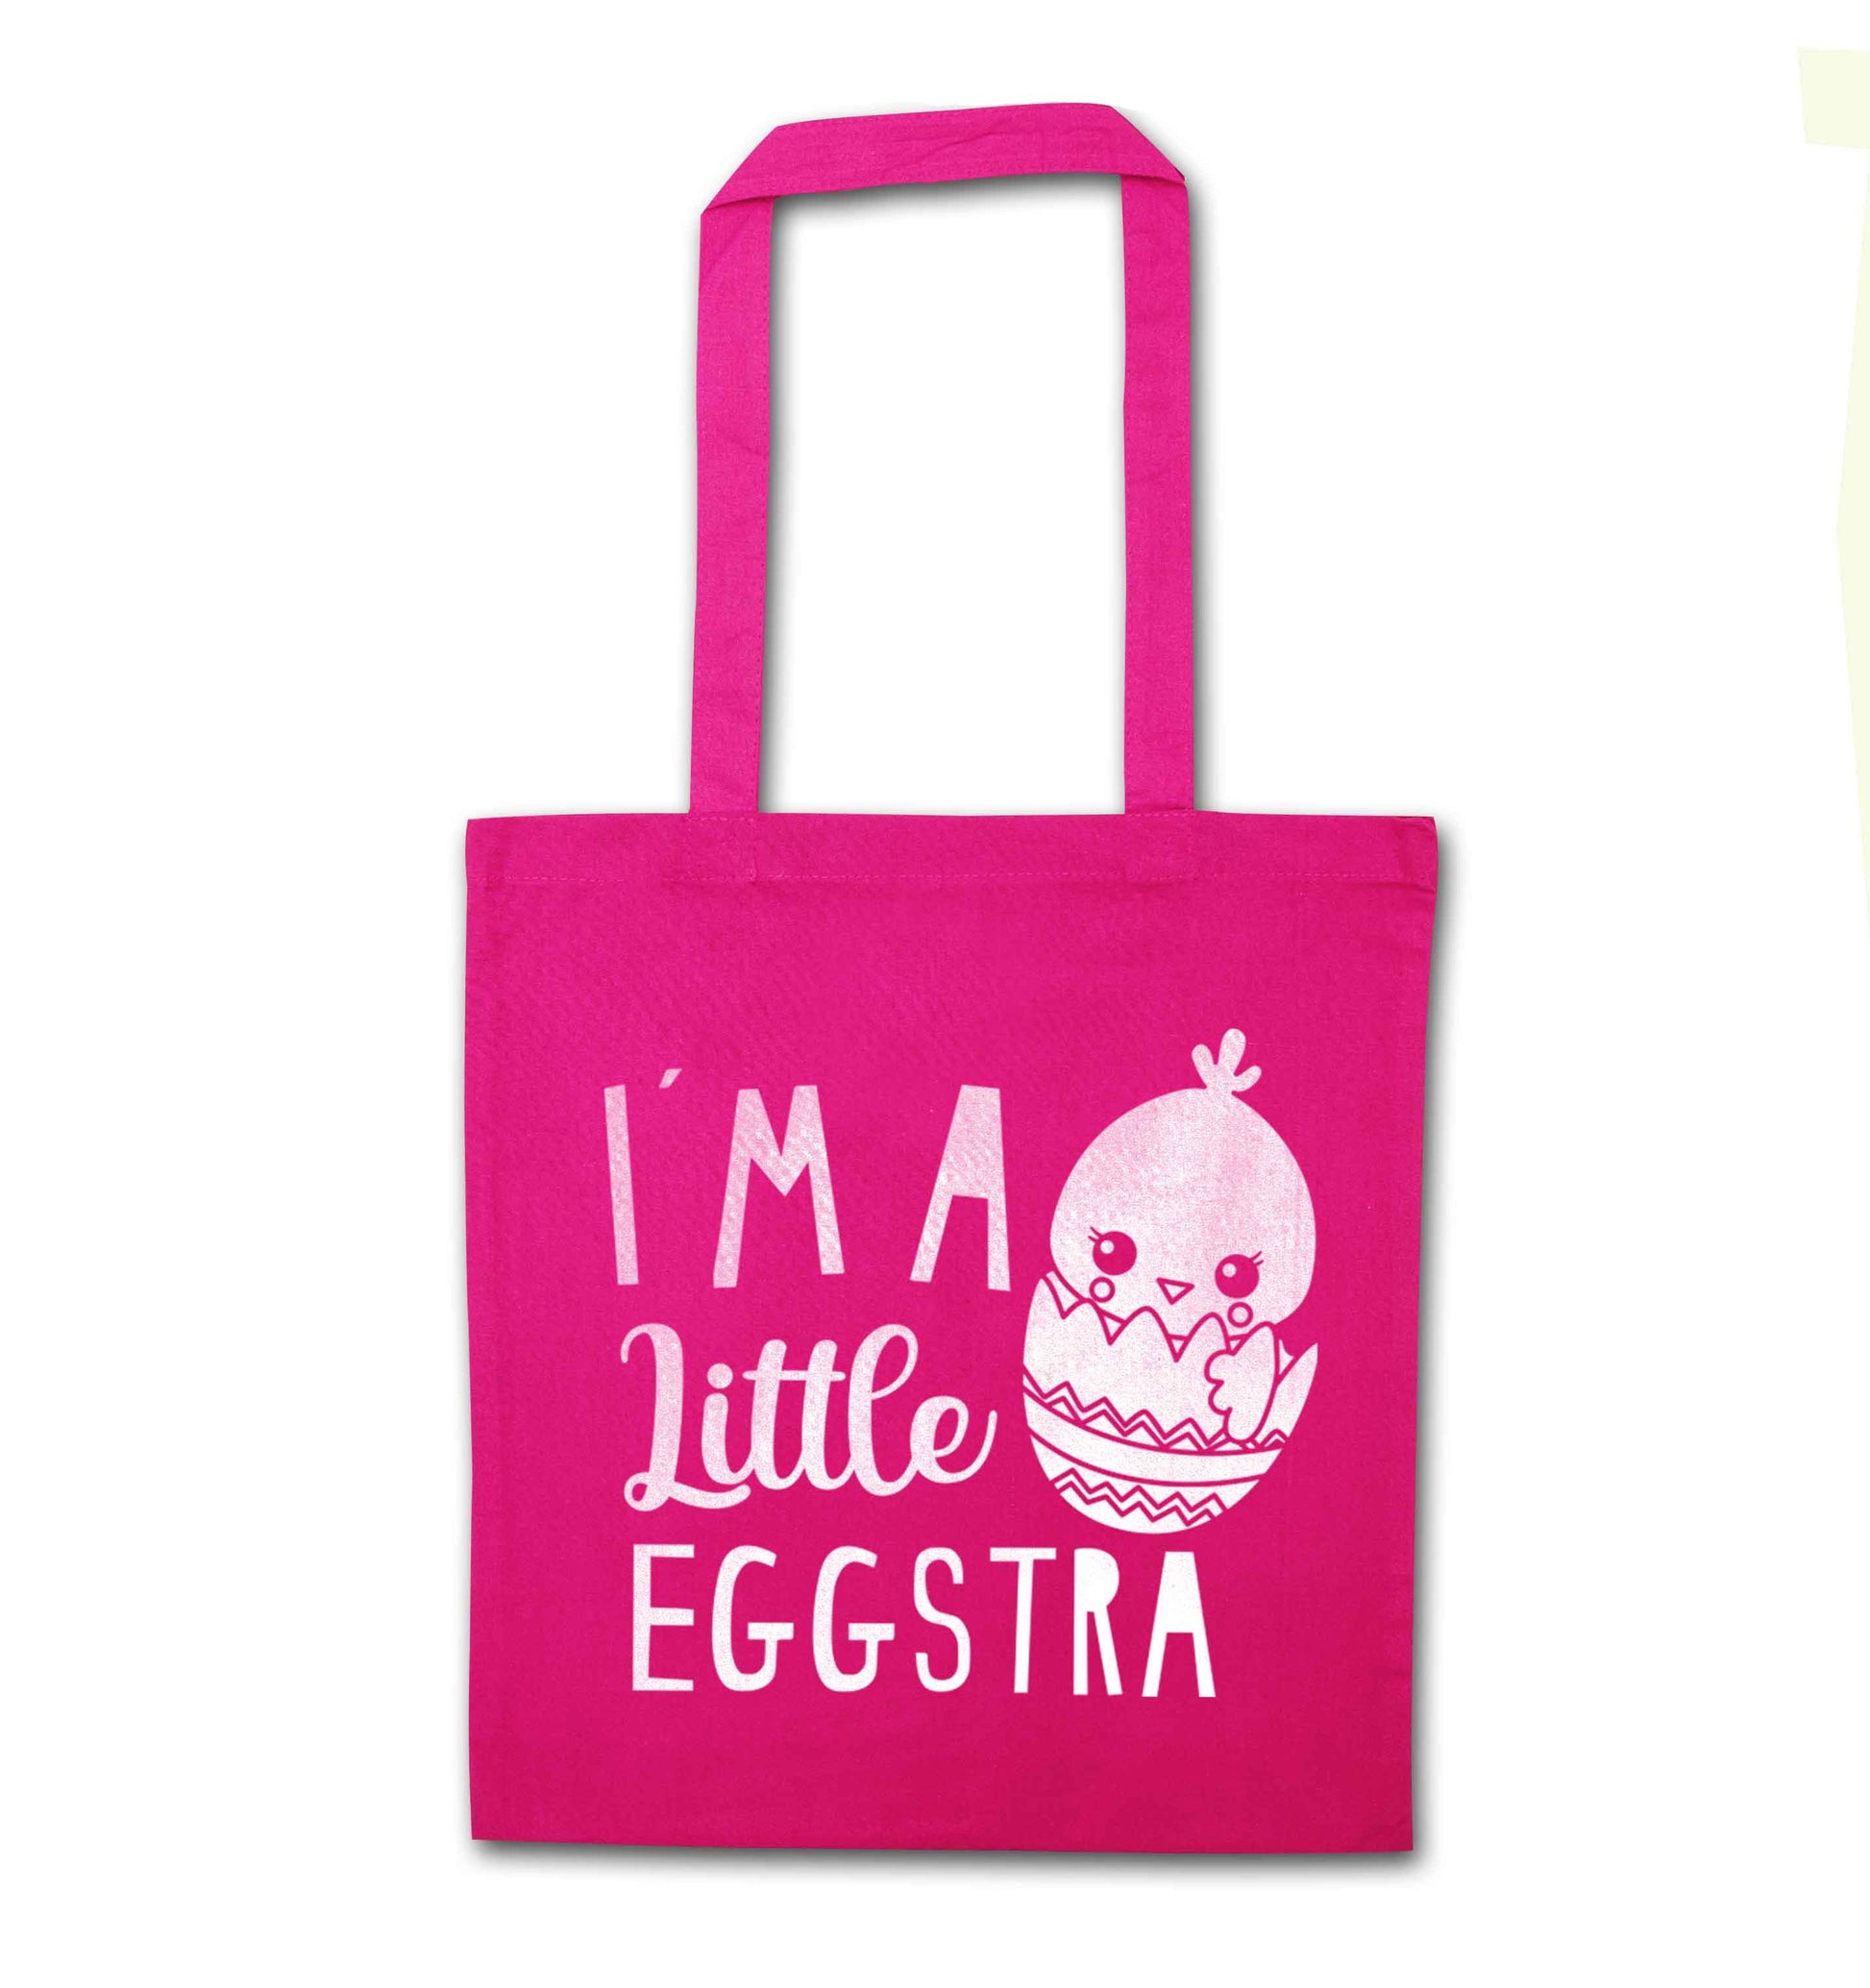 I'm a little eggstra pink tote bag